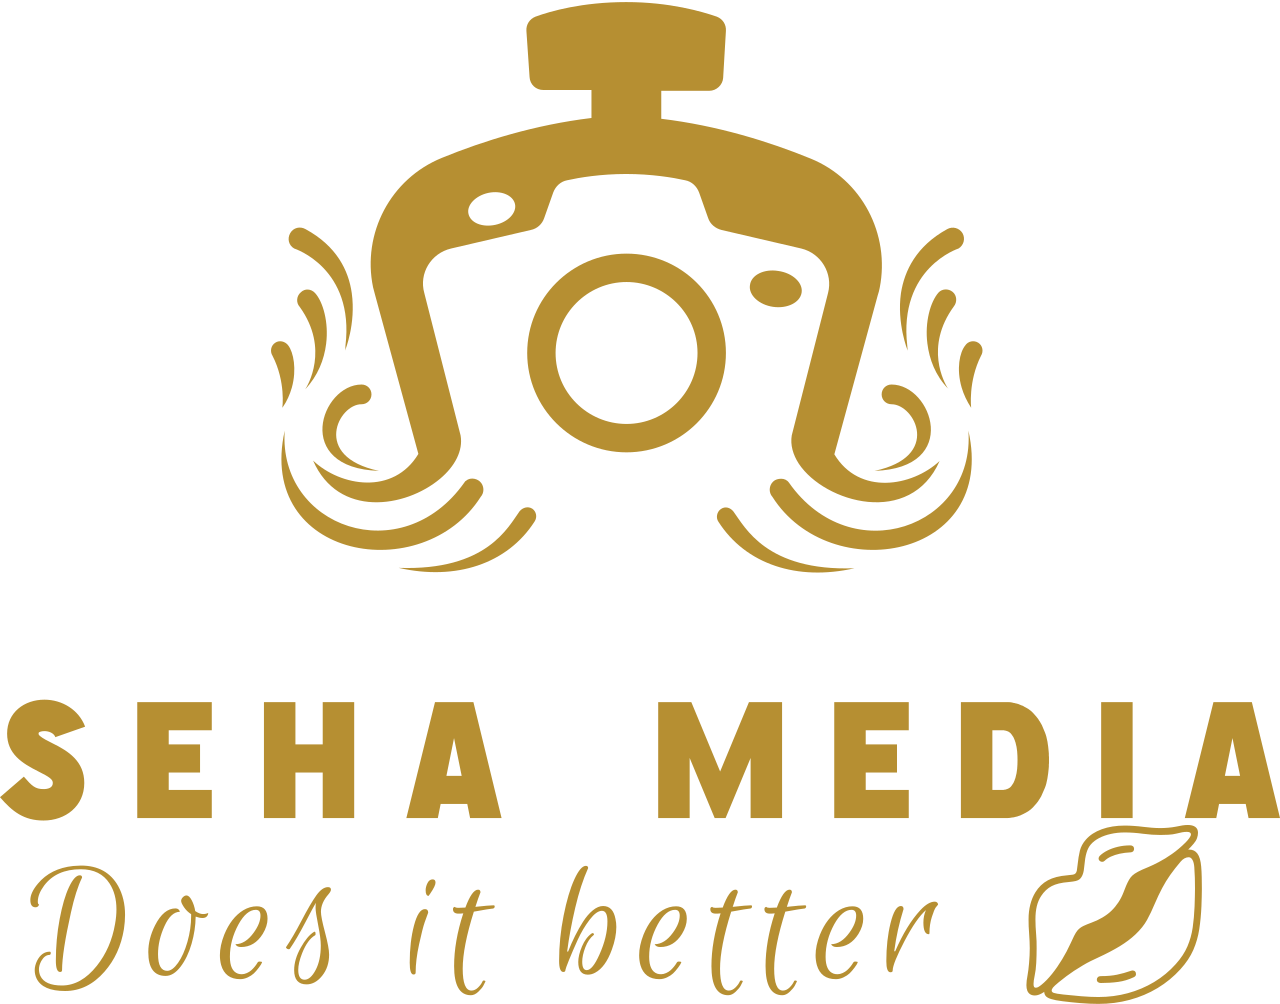 Seha Media's logo